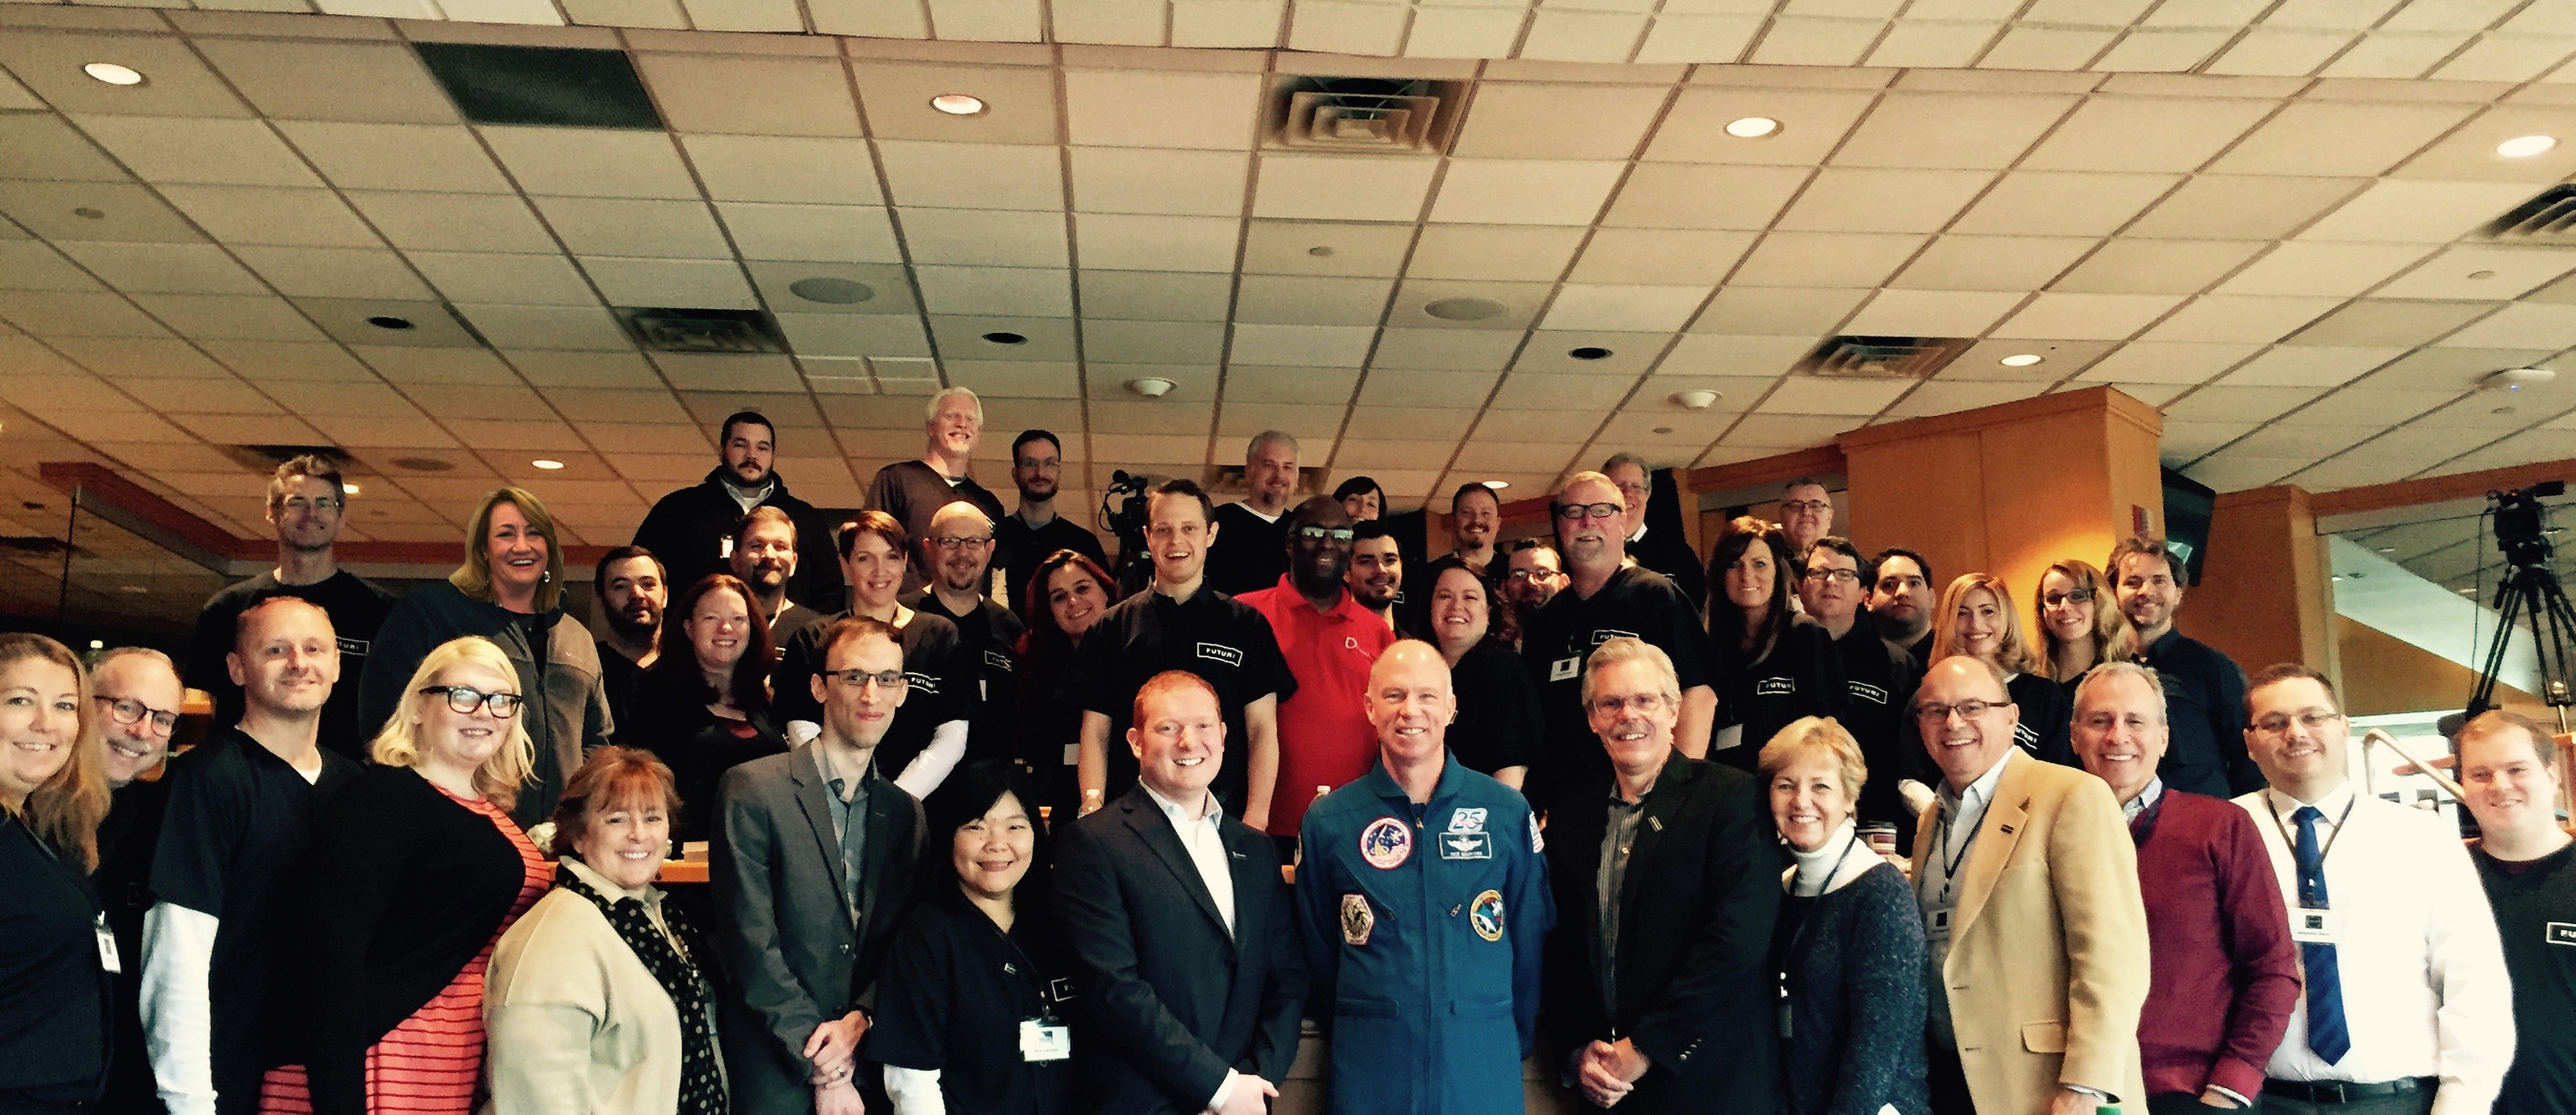 The Futuri Media team at a recent company meeting with Astronaut Rick Searfoss.